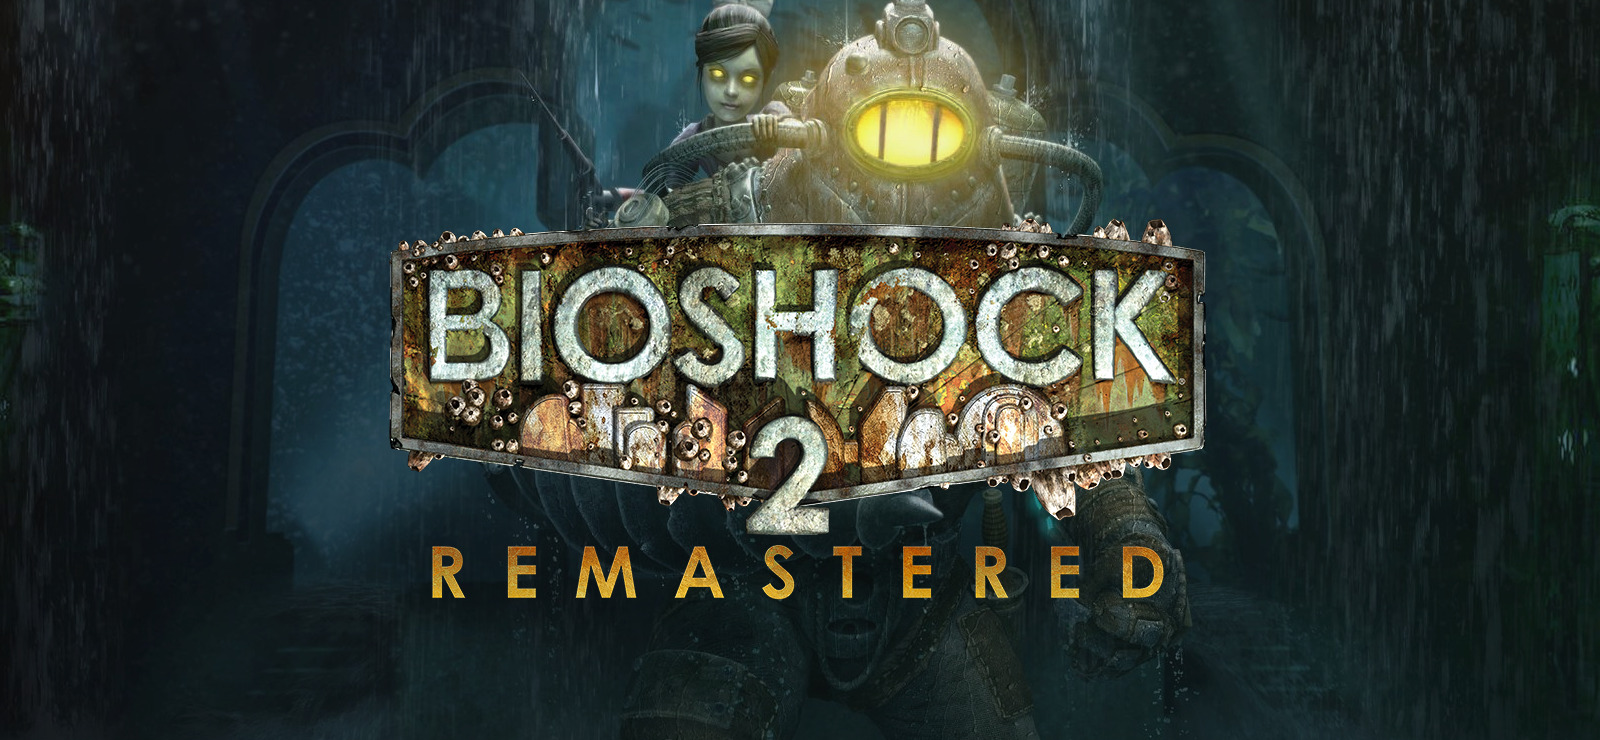 85-bioshock-2-remastered-on-gog